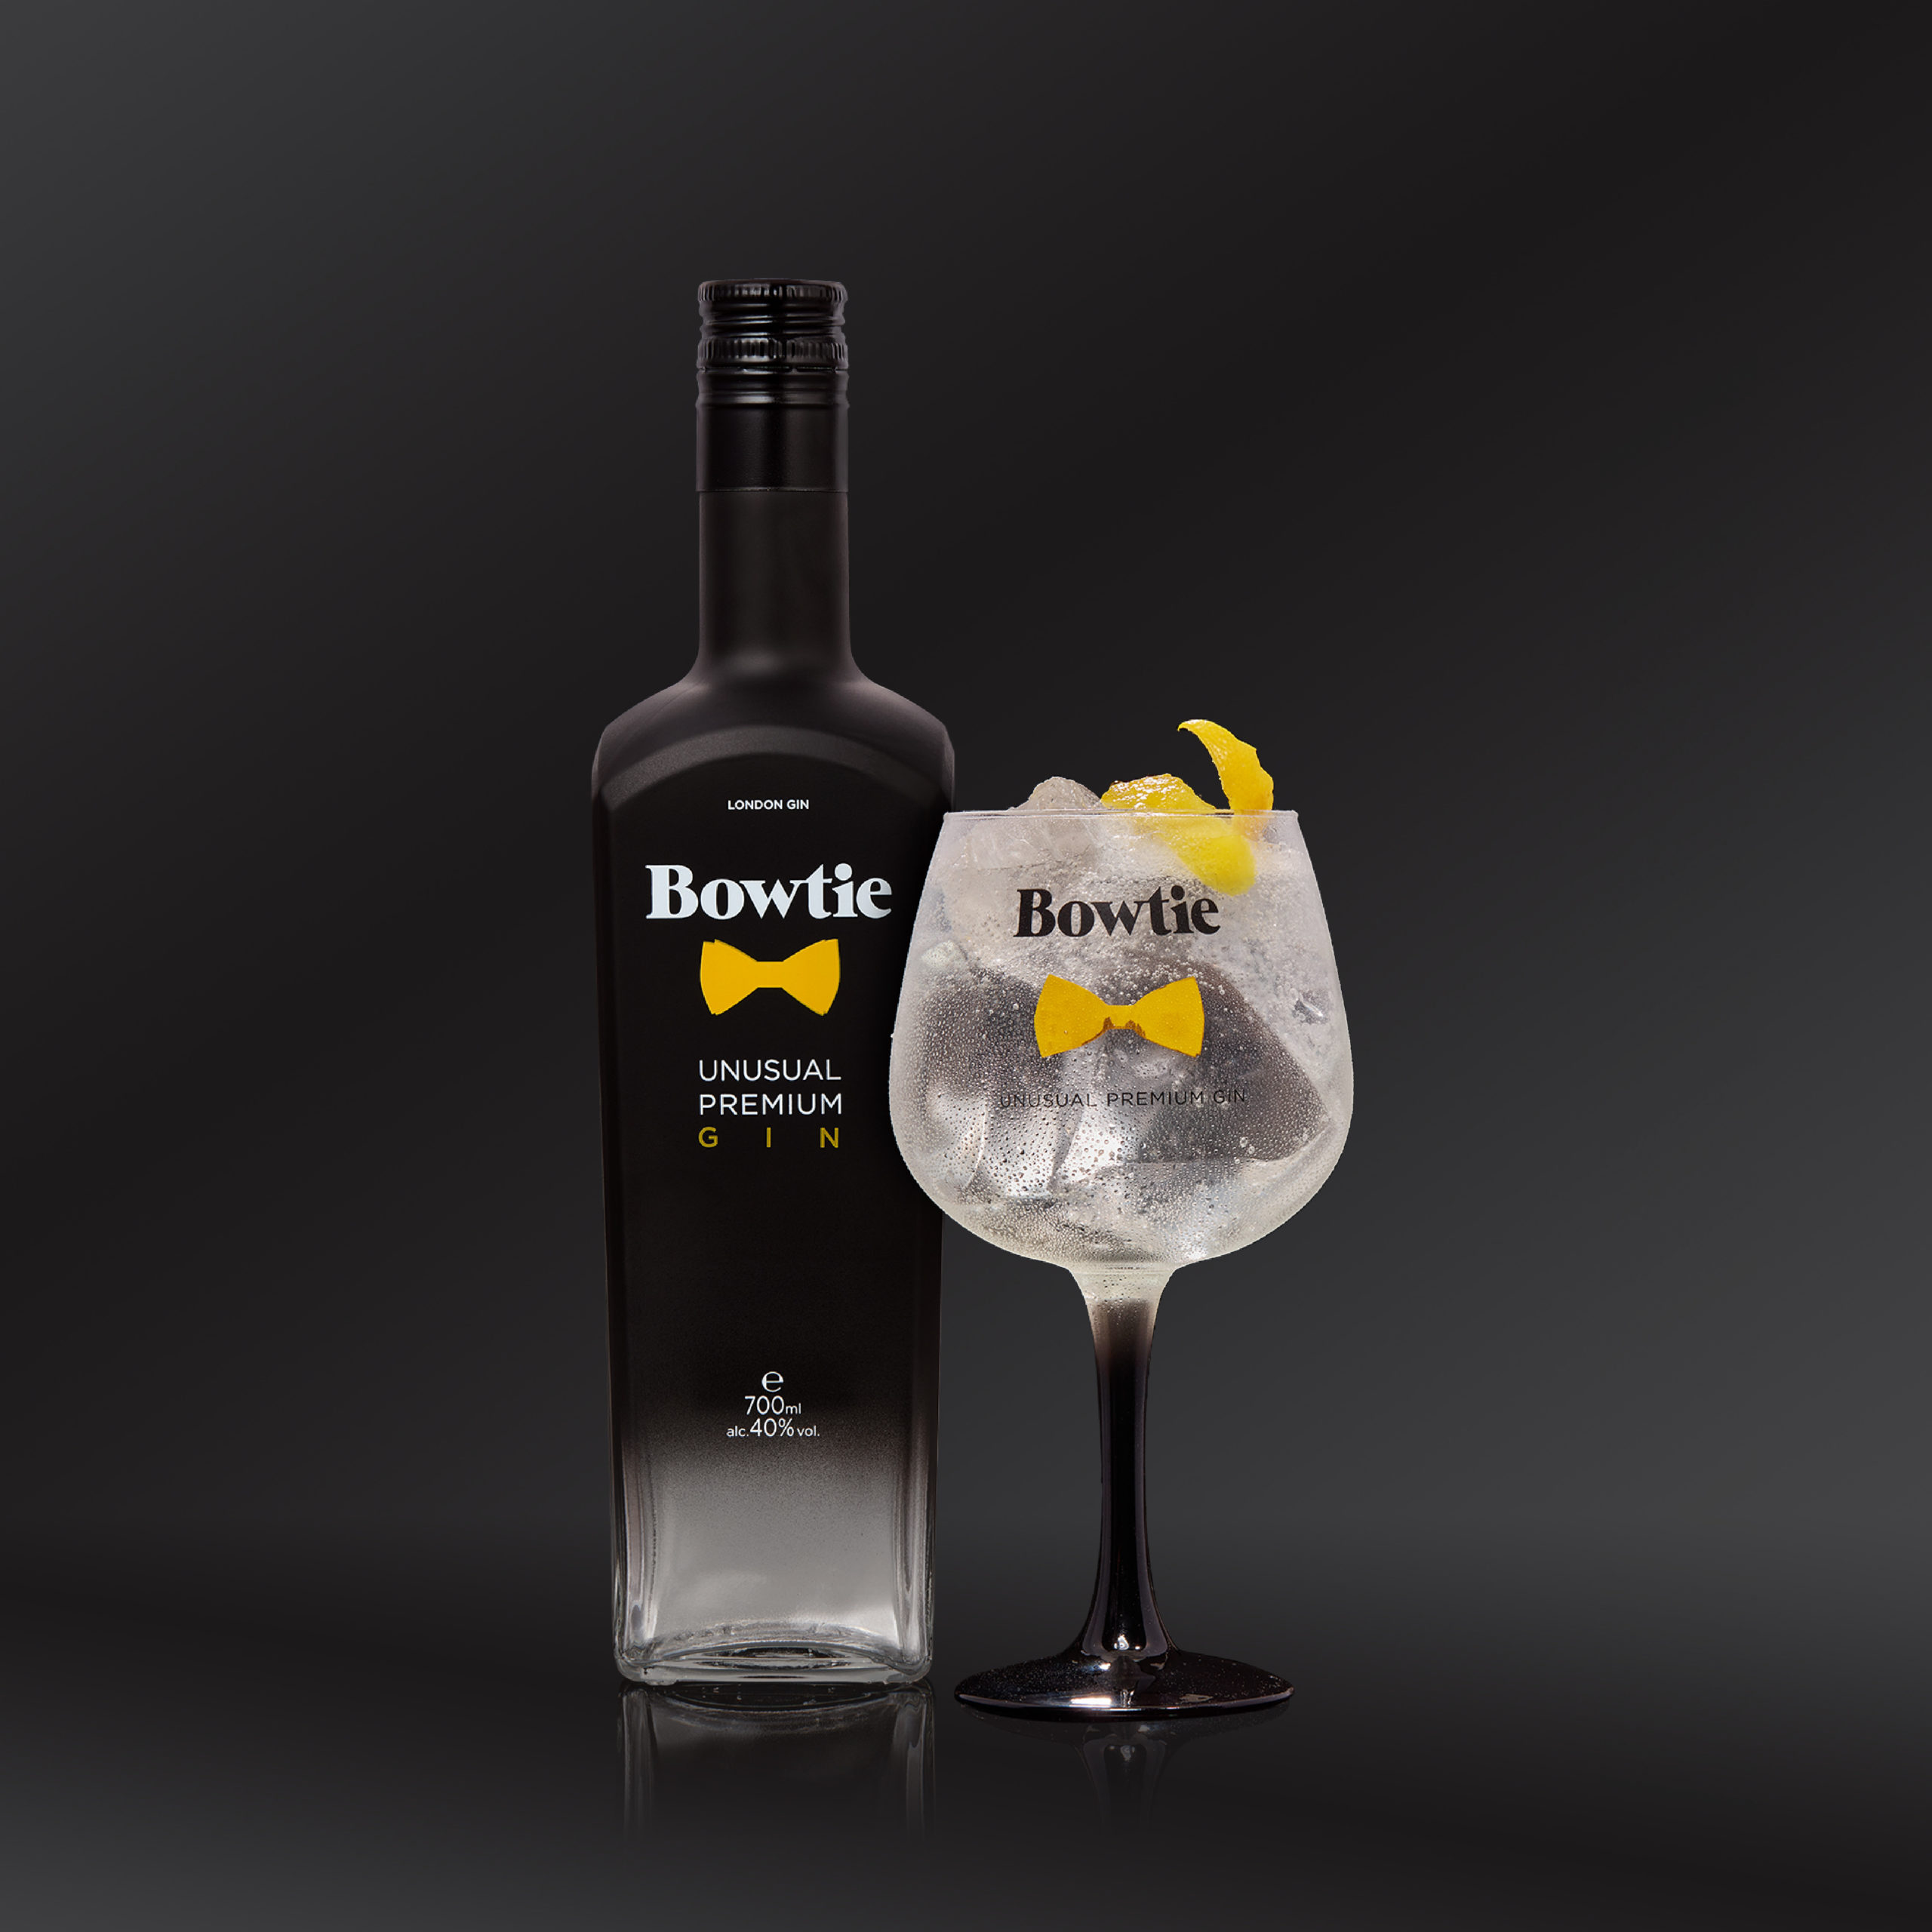 ​Legendario lanza la nueva botella de su ginebra premium Bowtie